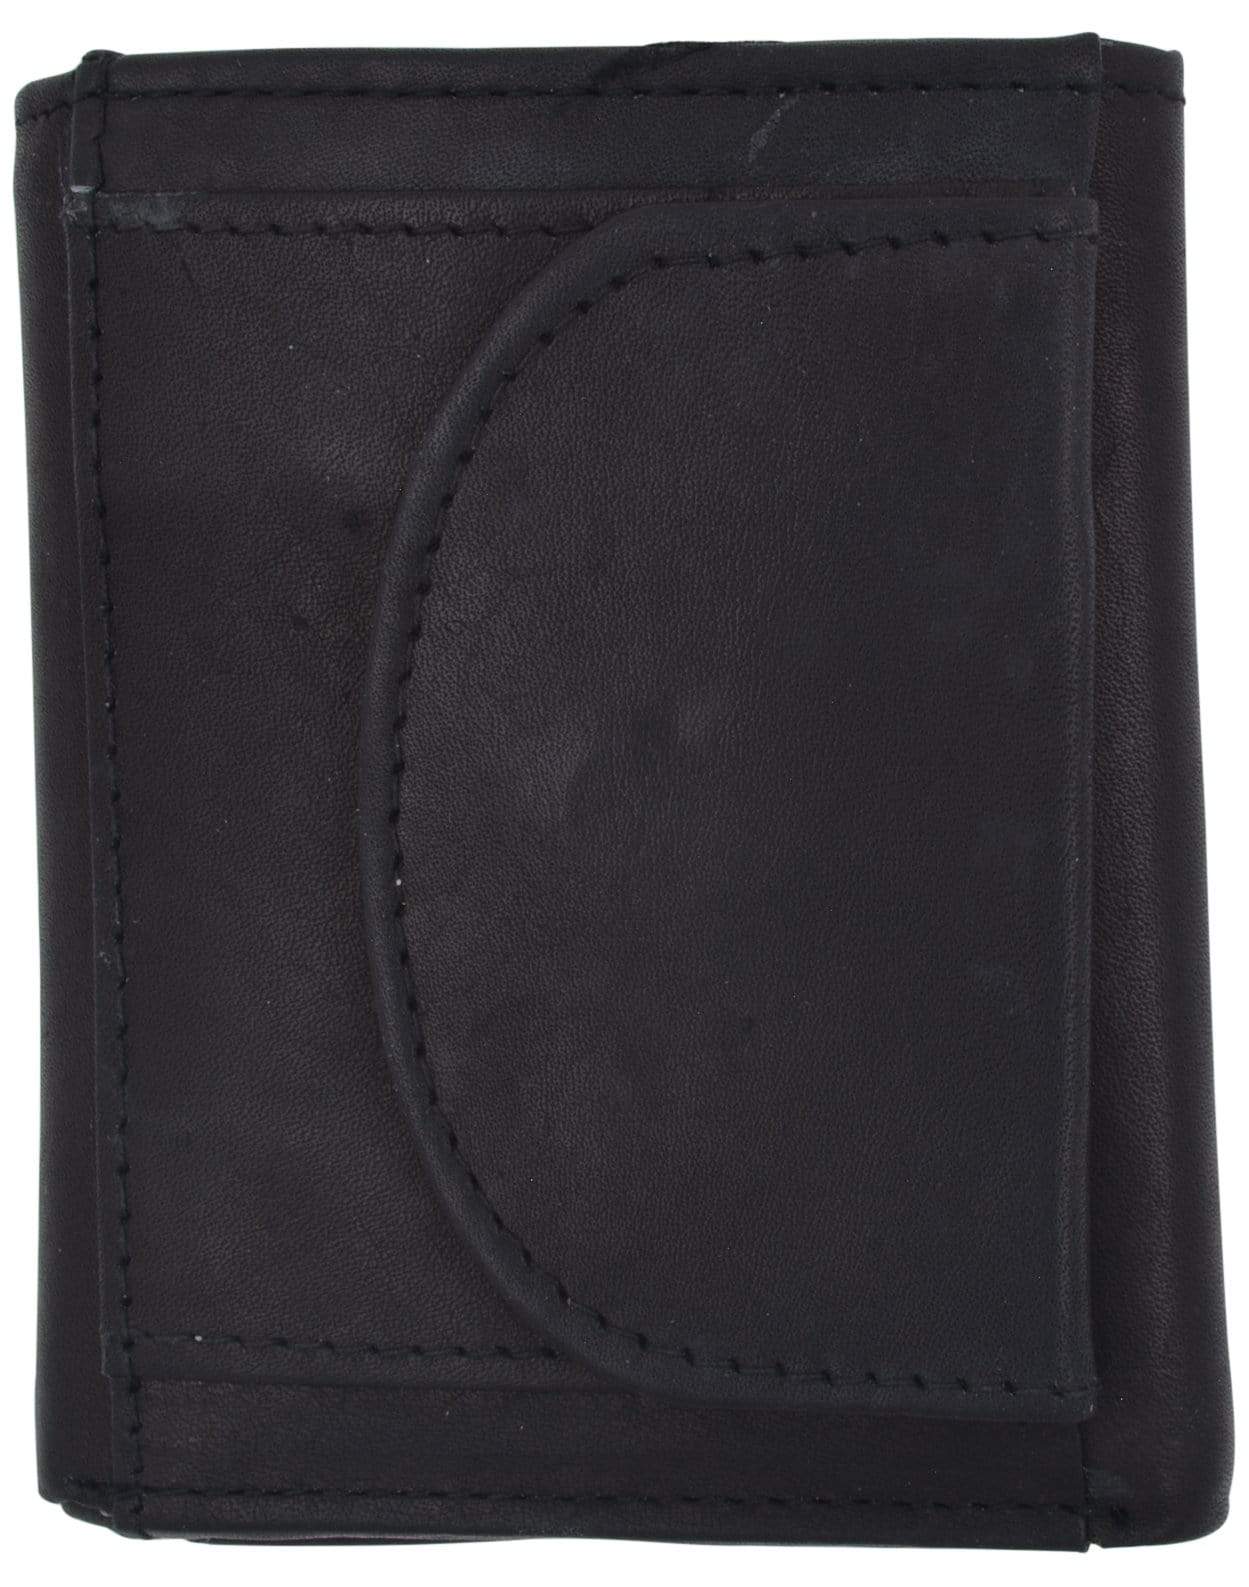 BAYDERİ Genuine Leather Handy Black Men's Wallet With Coin Holder